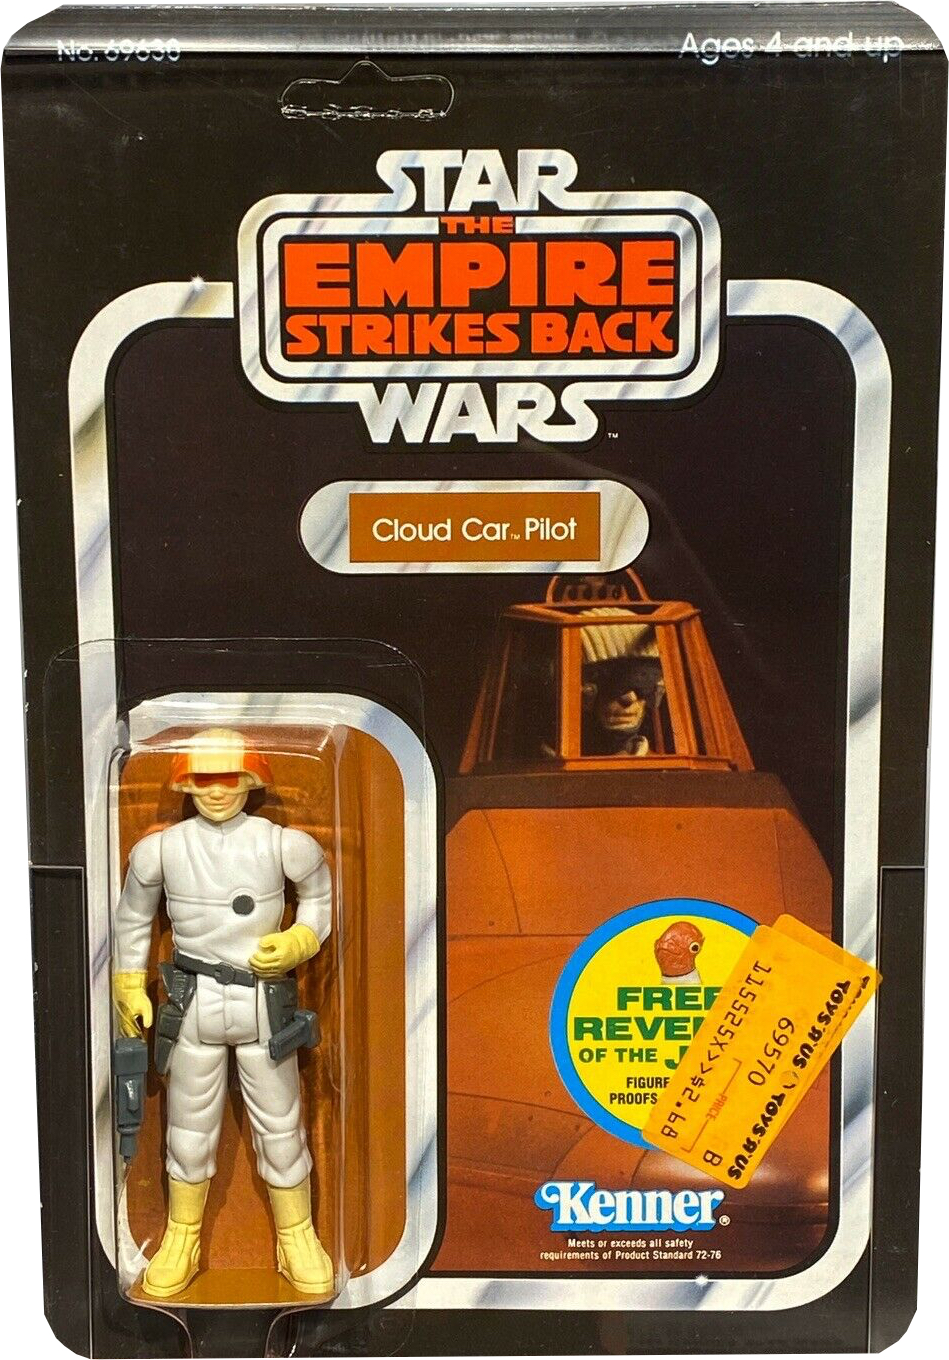 Star Wars Miniatures Cloud Car Pilot 43/60 The Force Unleashed 